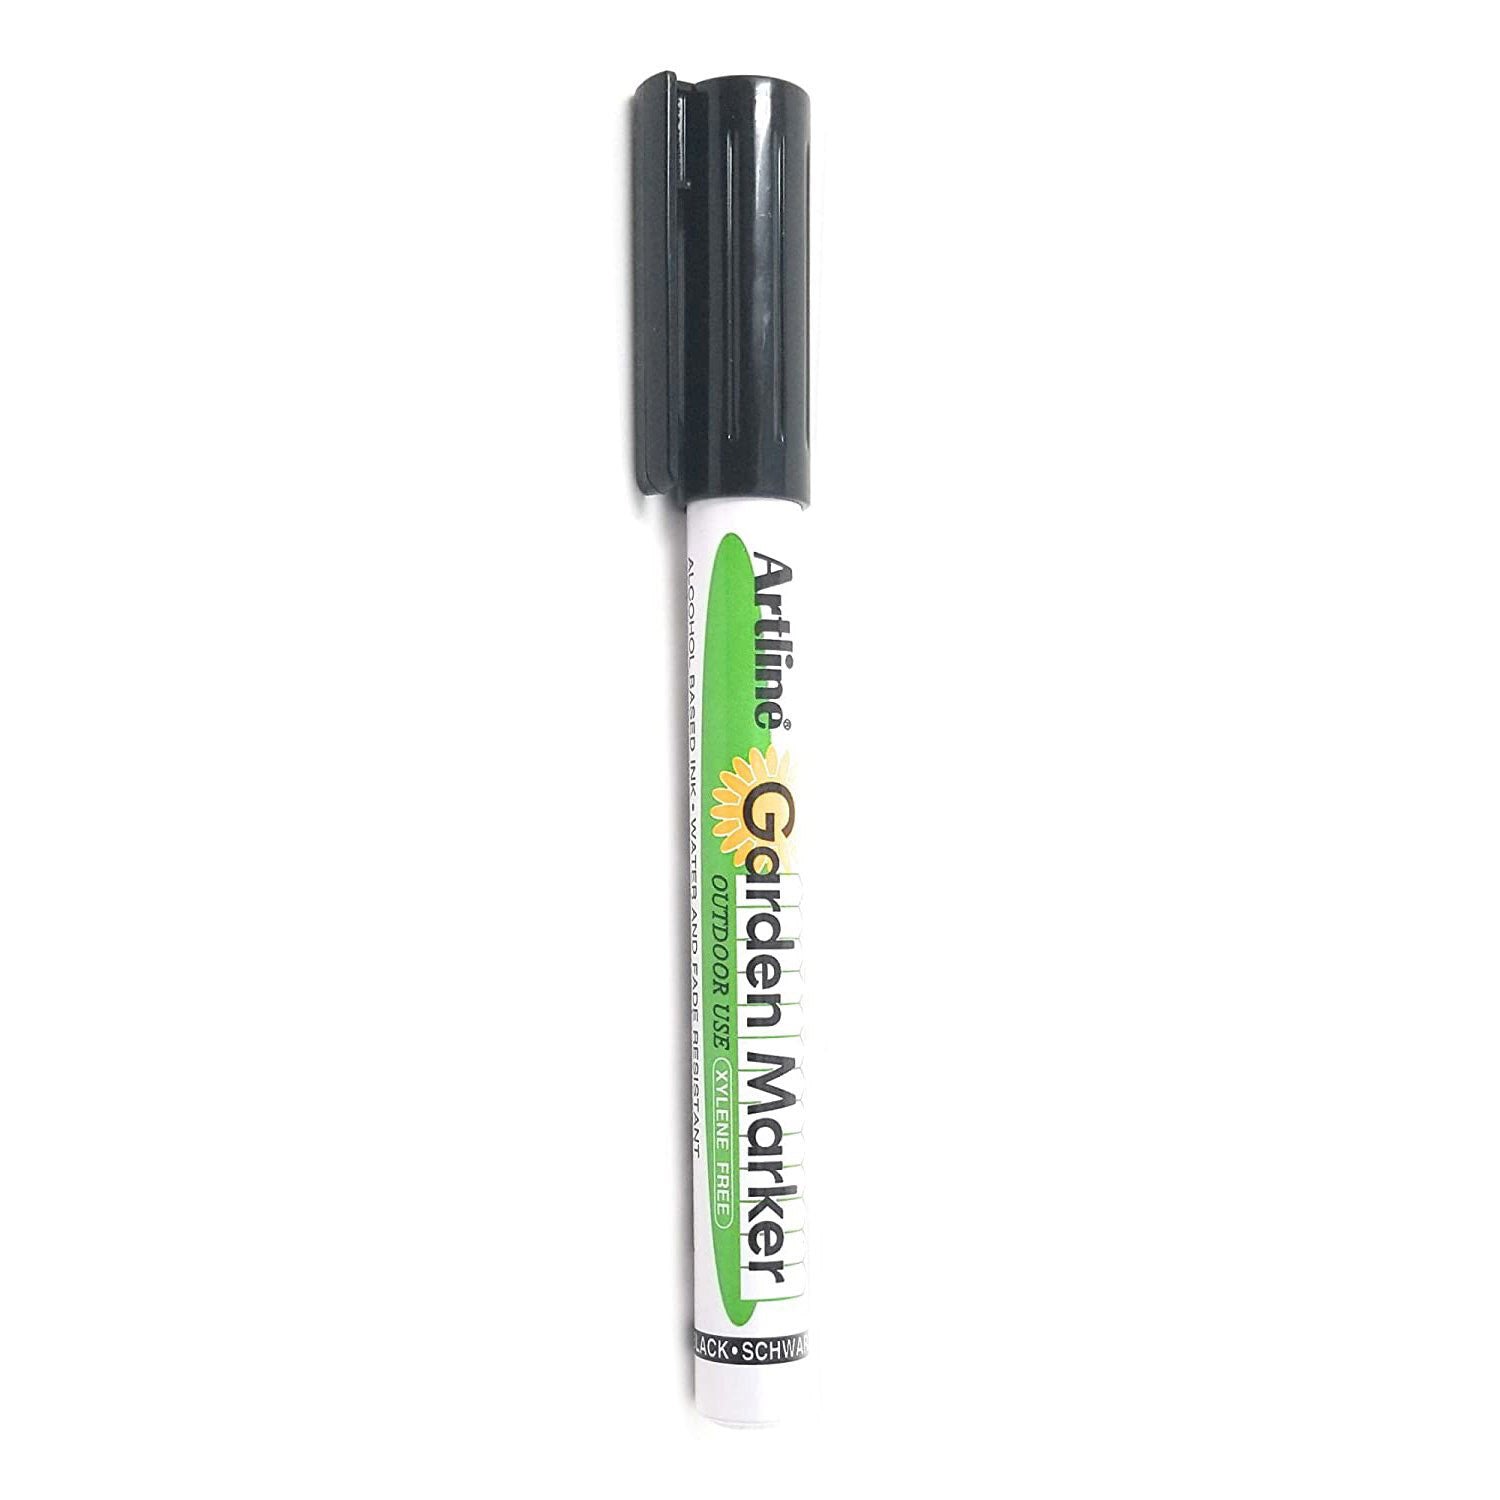 133 SUPPLY - 2 Pack Garden Marker Pen Permanent Markers Black (UV